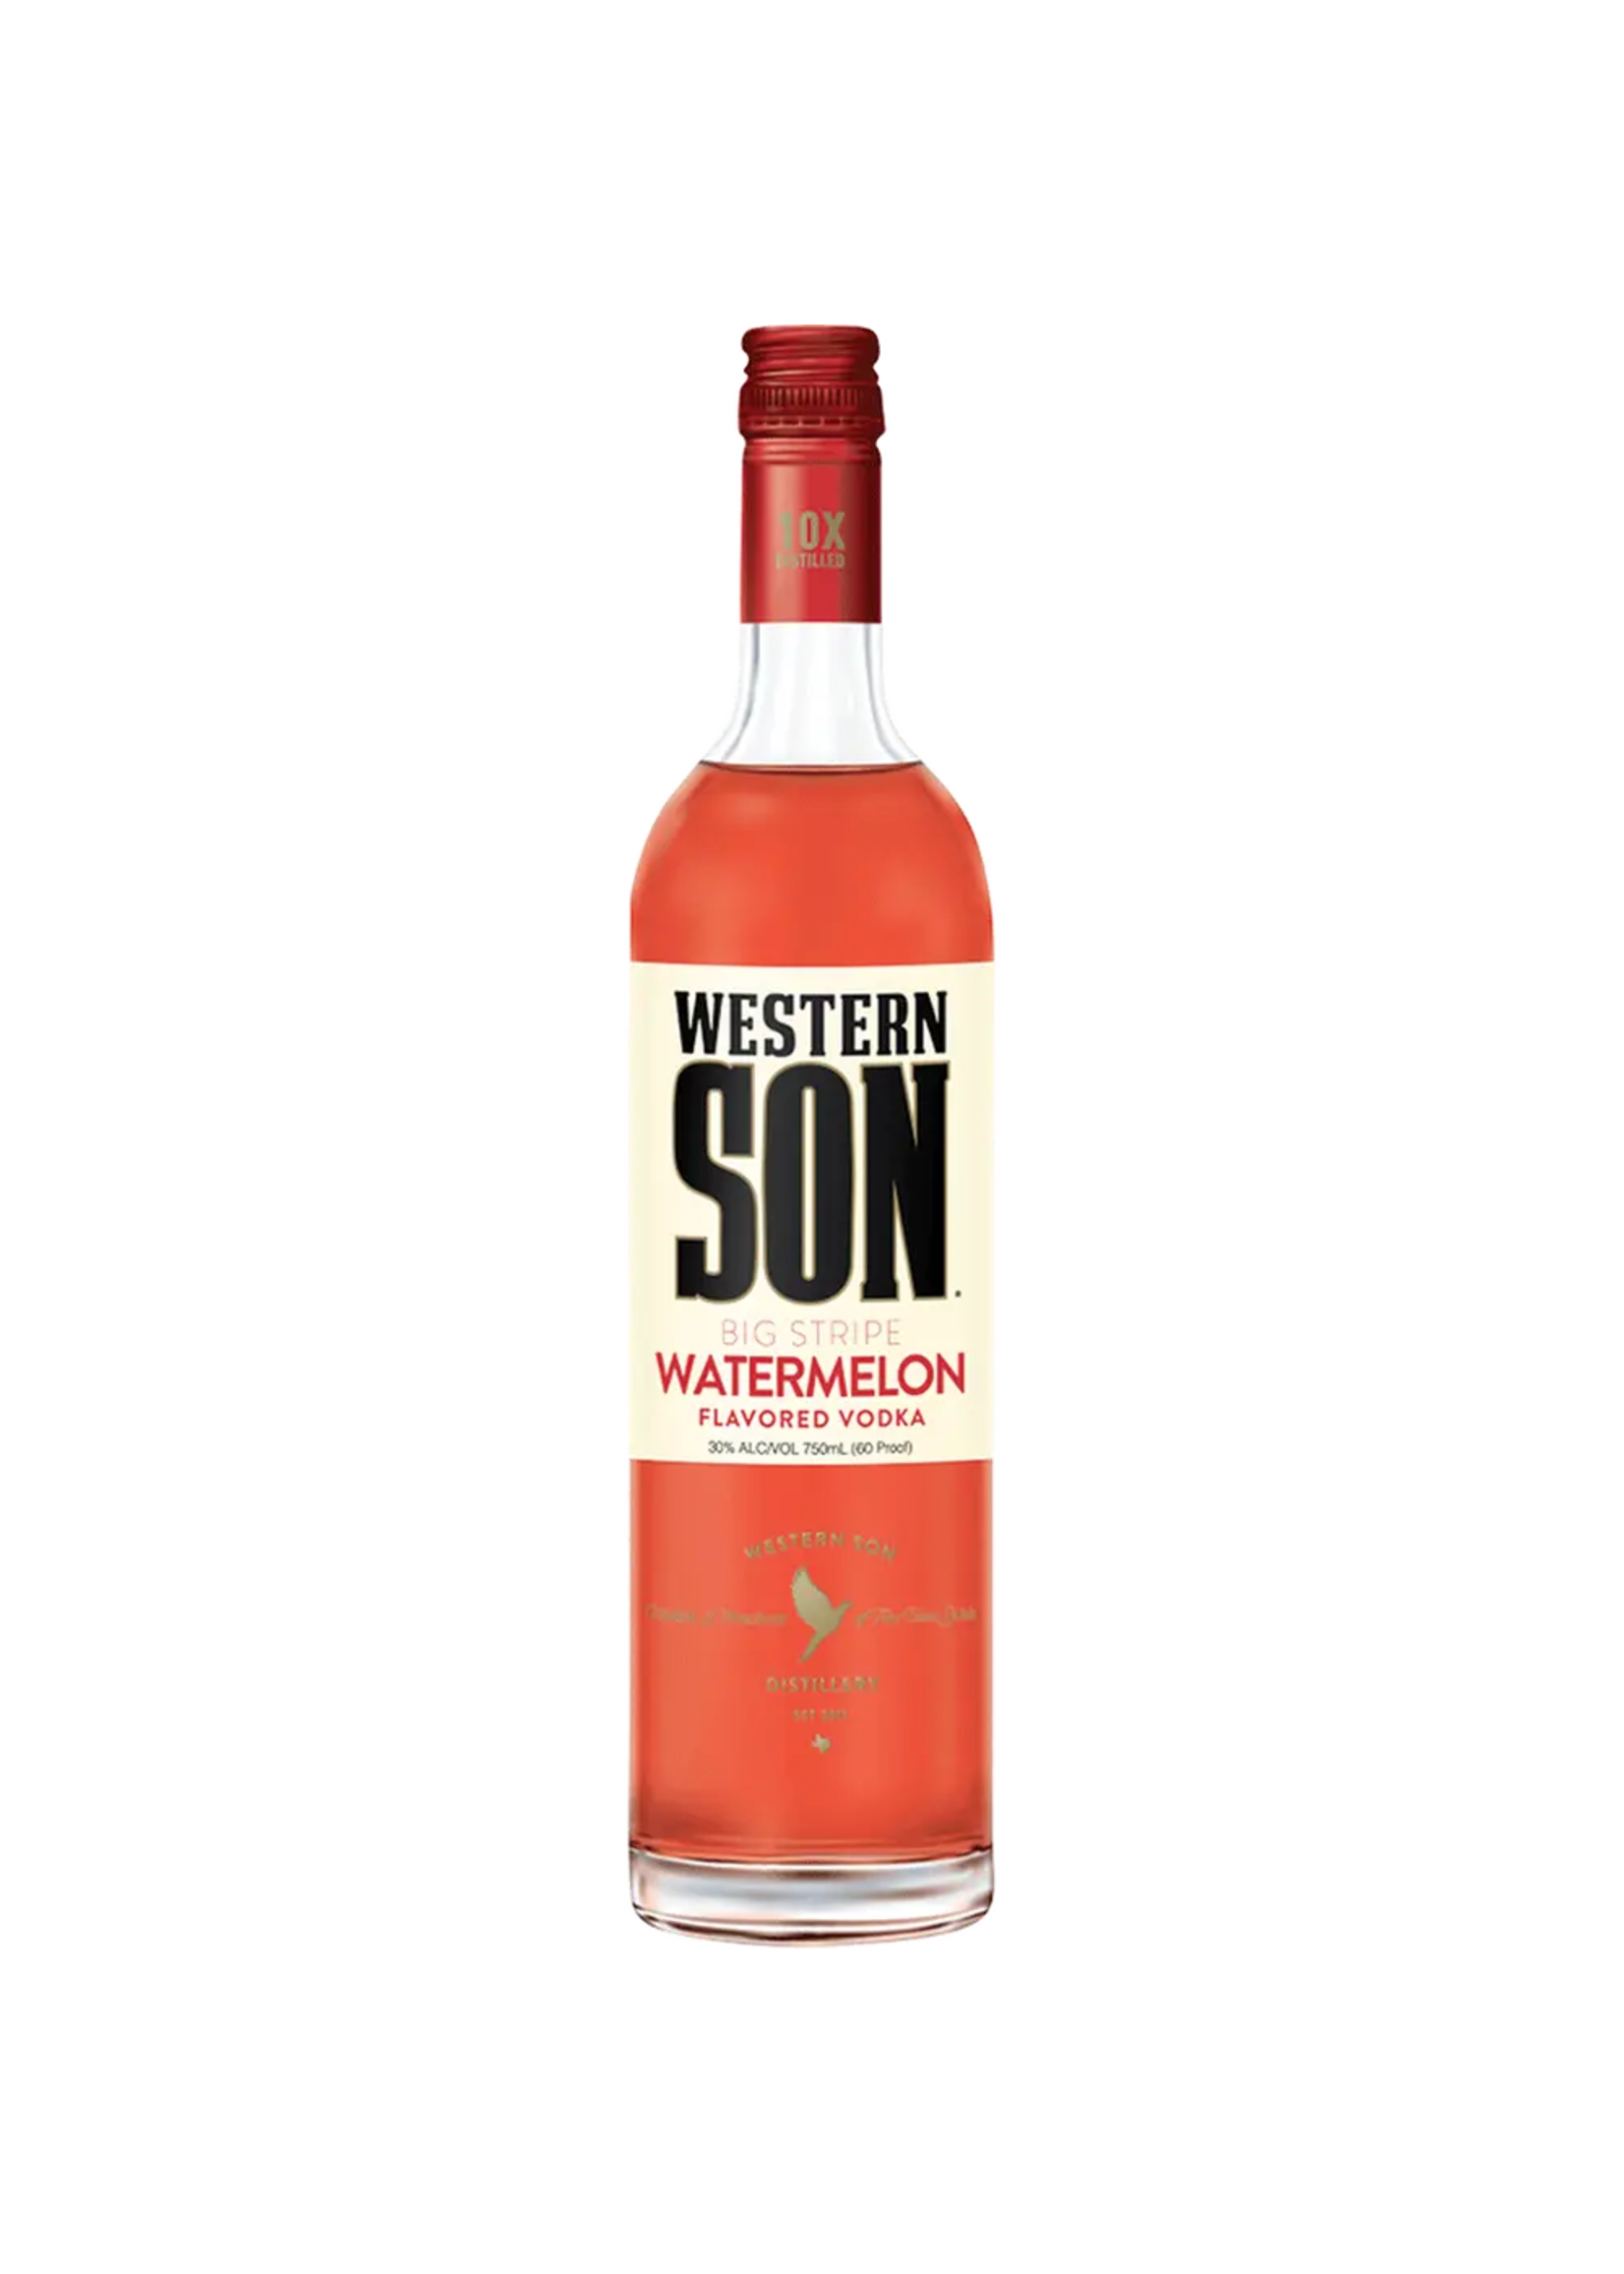 Western Son Western Son Watermelon Flavored Vodka 60Proof 750ml